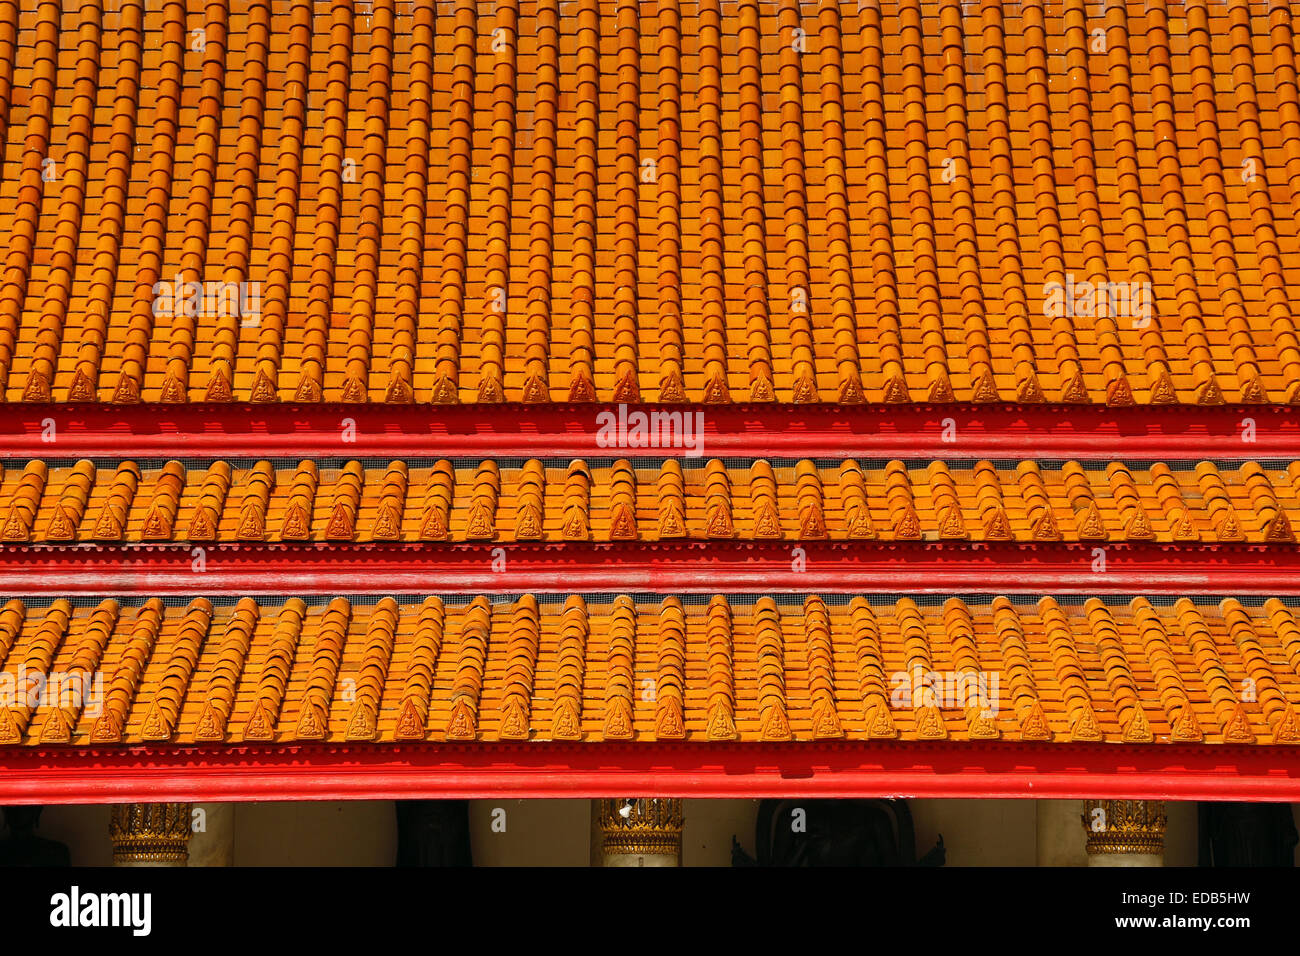 Tiled roof with orange tiles at Wat Benchamabopitr, the Marble Temple, Bangkok, Thailand Stock Photo